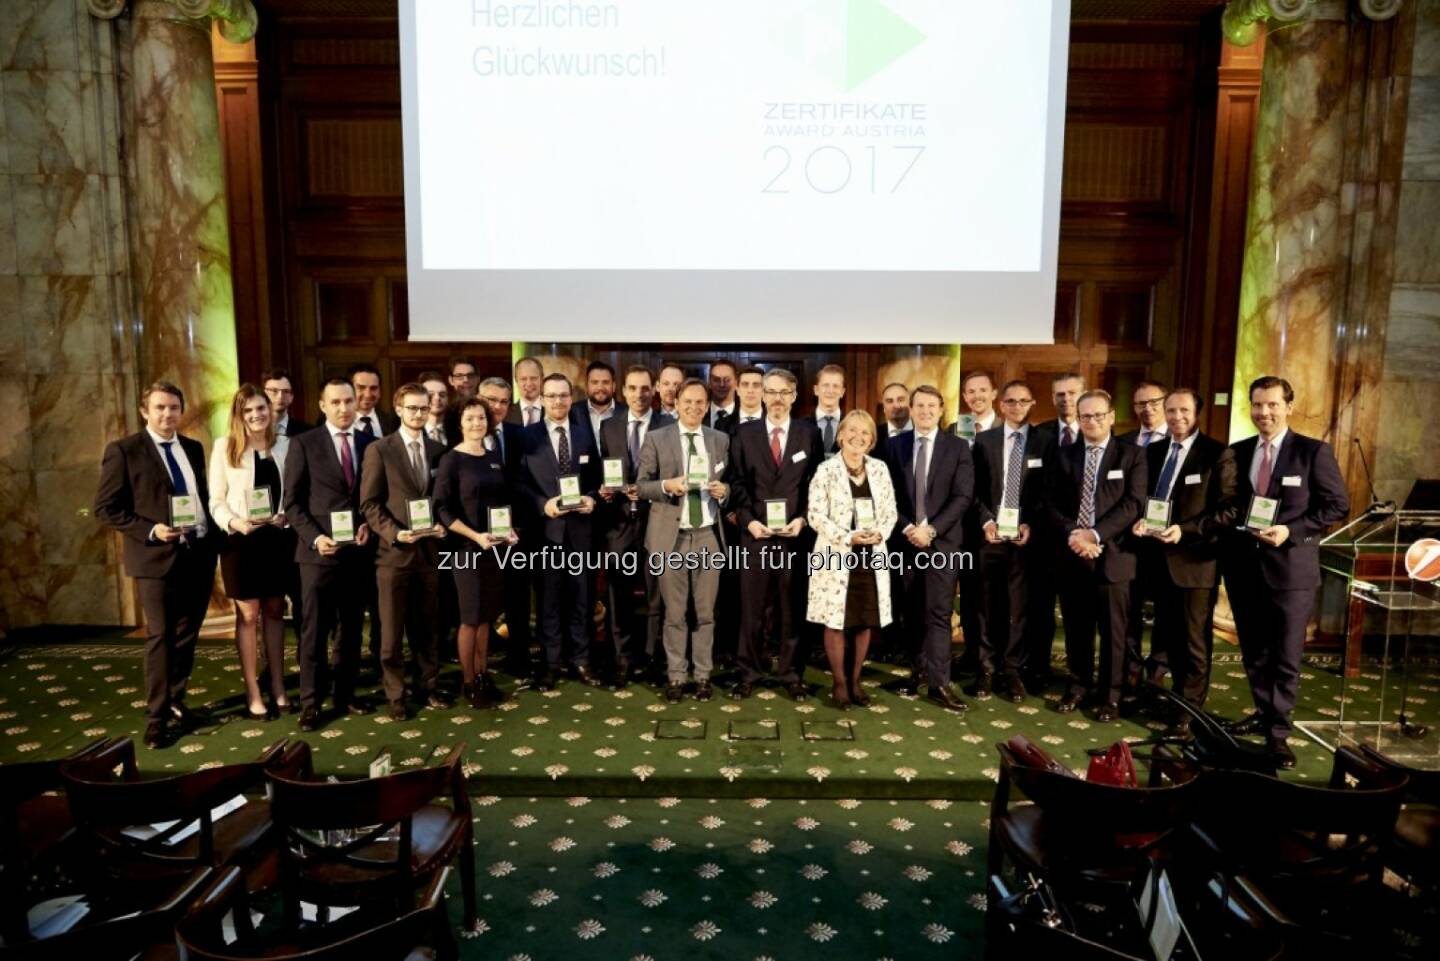 Zertifikate Award Austria 2017 - Alle Preisträger (Fotocredit: Zertifikate Forum Austria)